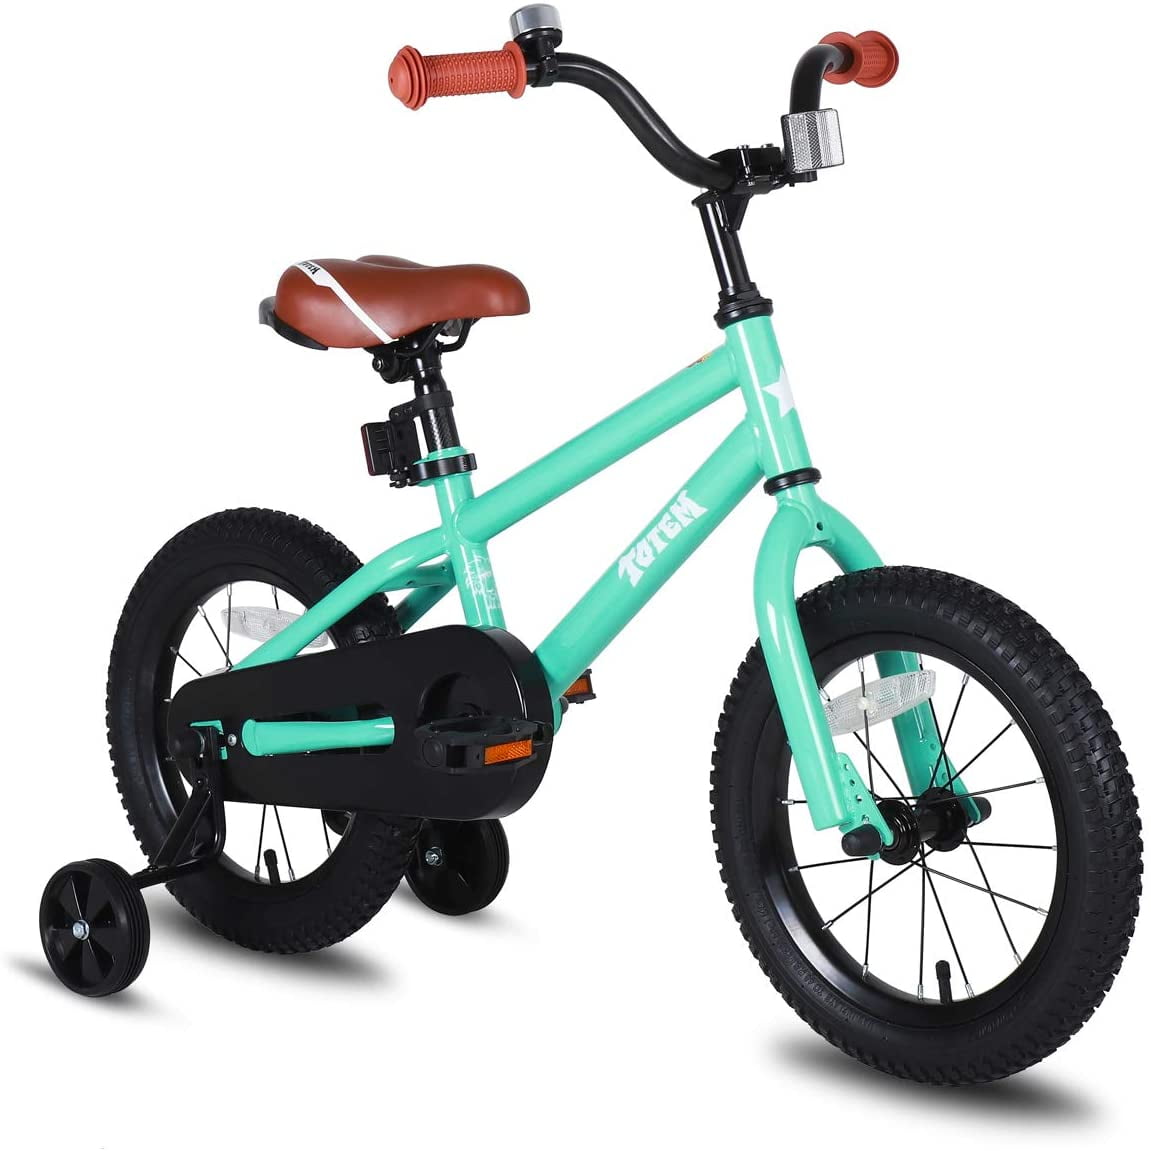 JOYSTAR Totem Kids Bike with Training Wheels for 12 14 16 18 inch Bike Kickstand for 18 inch Bike Blue Ivory Pink Green Silver